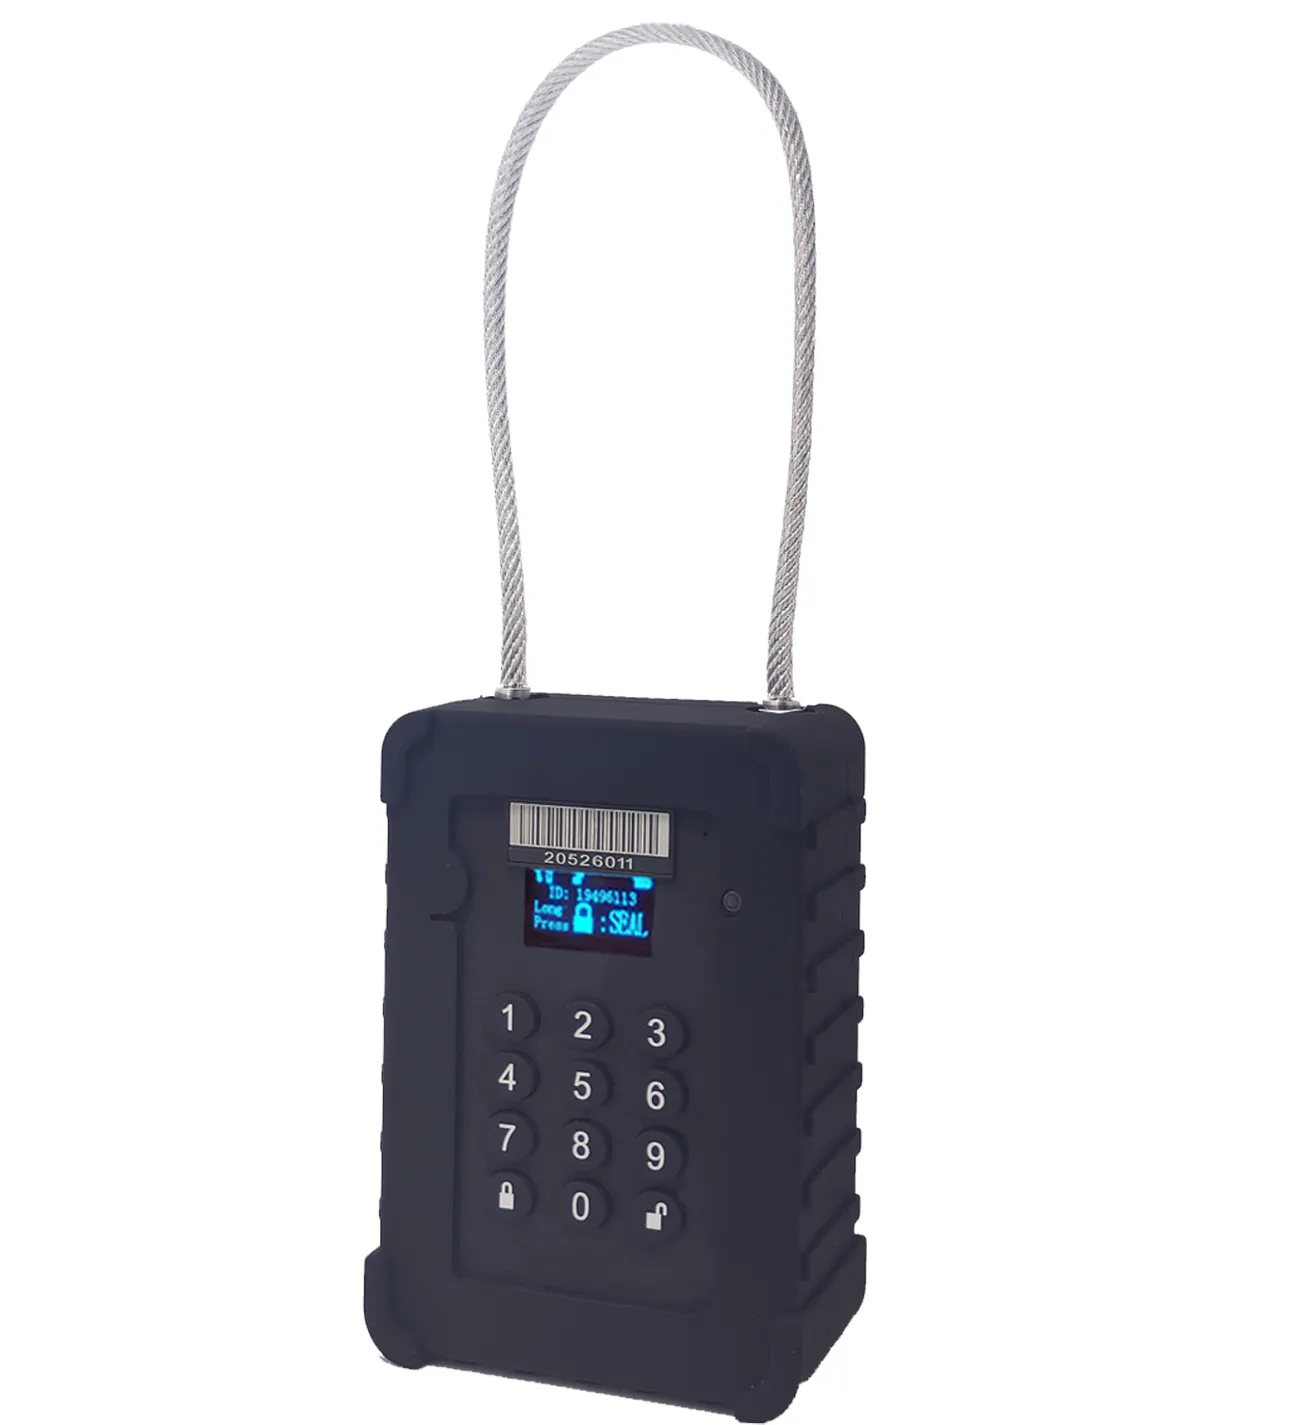 ToTarget กุญแจ Eseal IP67กันน้ำได้,กุญแจอิเล็กทรอนิกส์อัจฉริยะพร้อมตัวล็อค GPS GSM Tracker